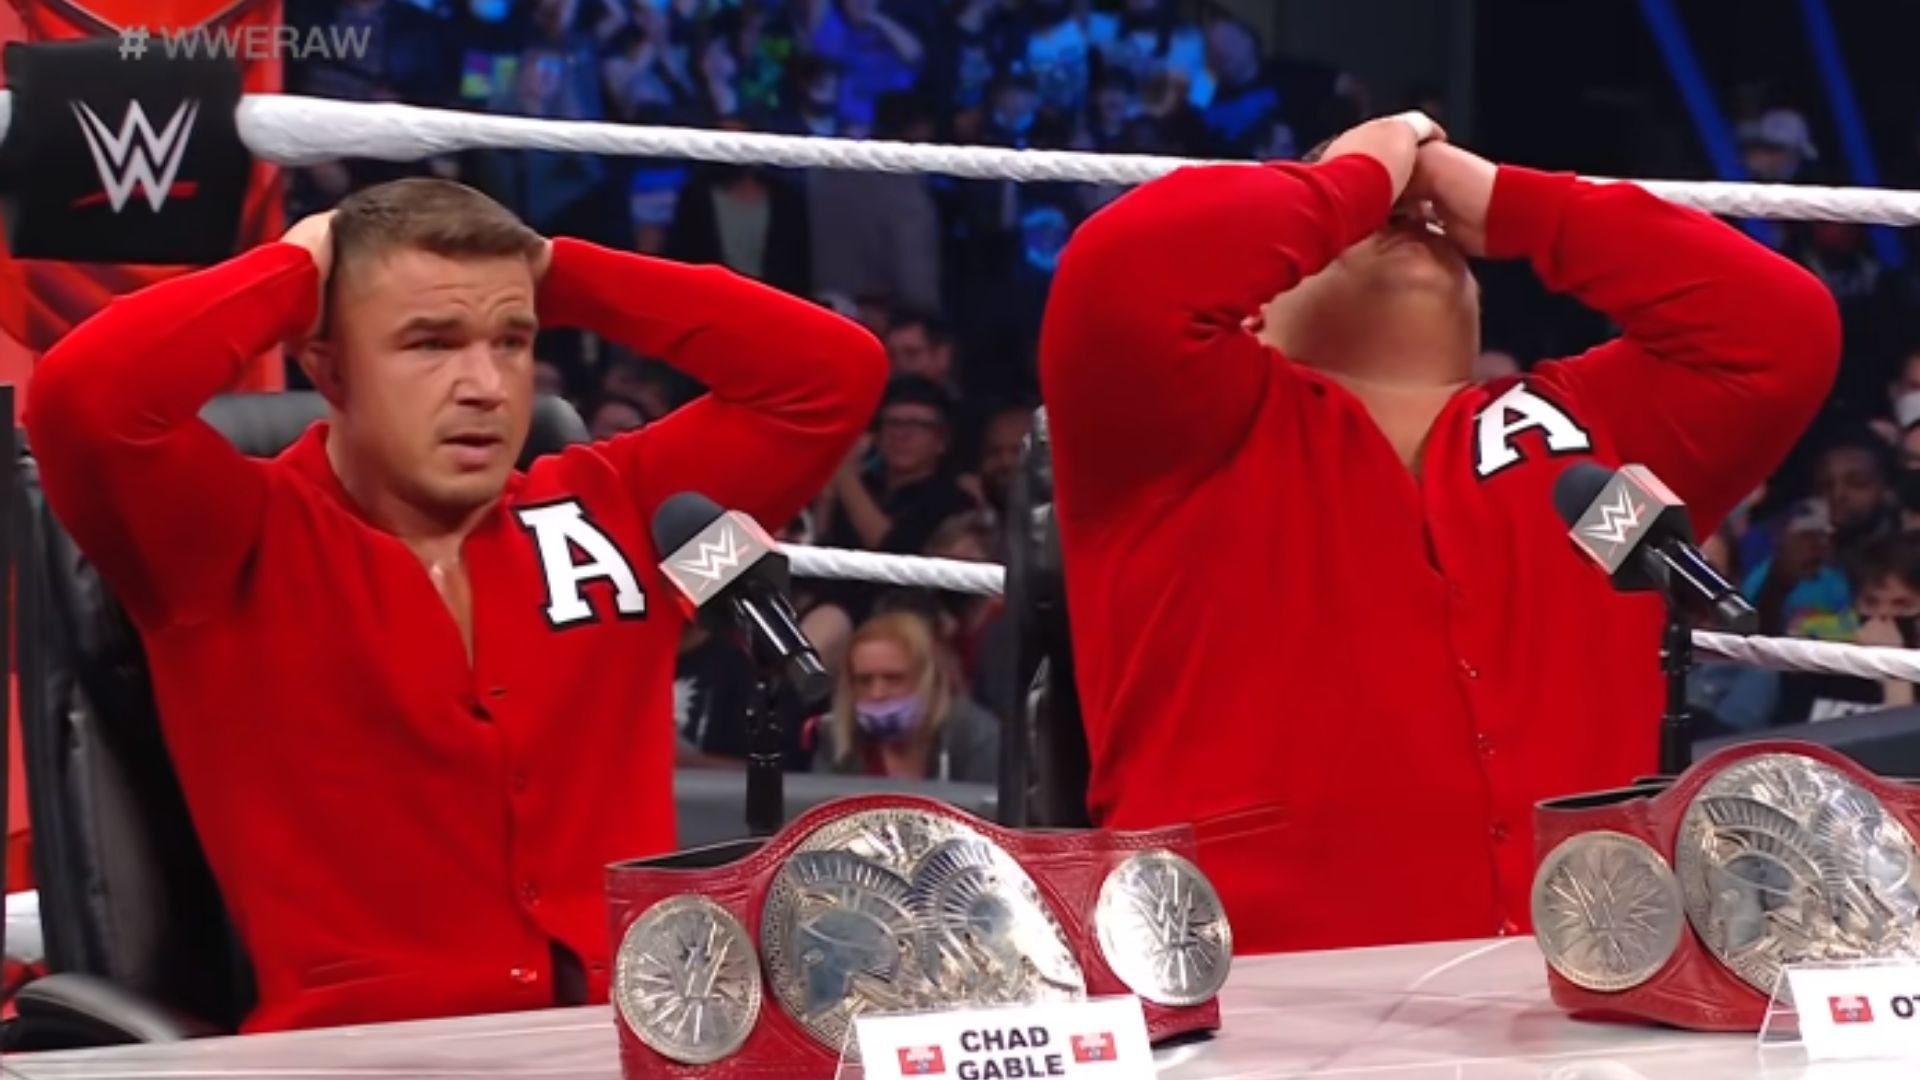 Chad Gable and Otis on WWE RAW